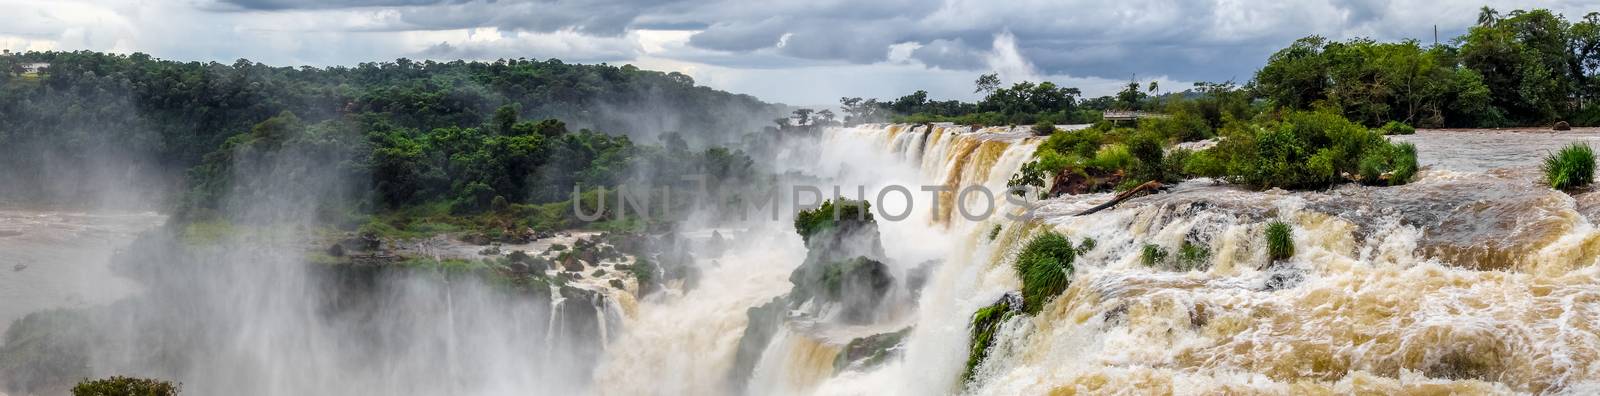 iguazu falls by daboost